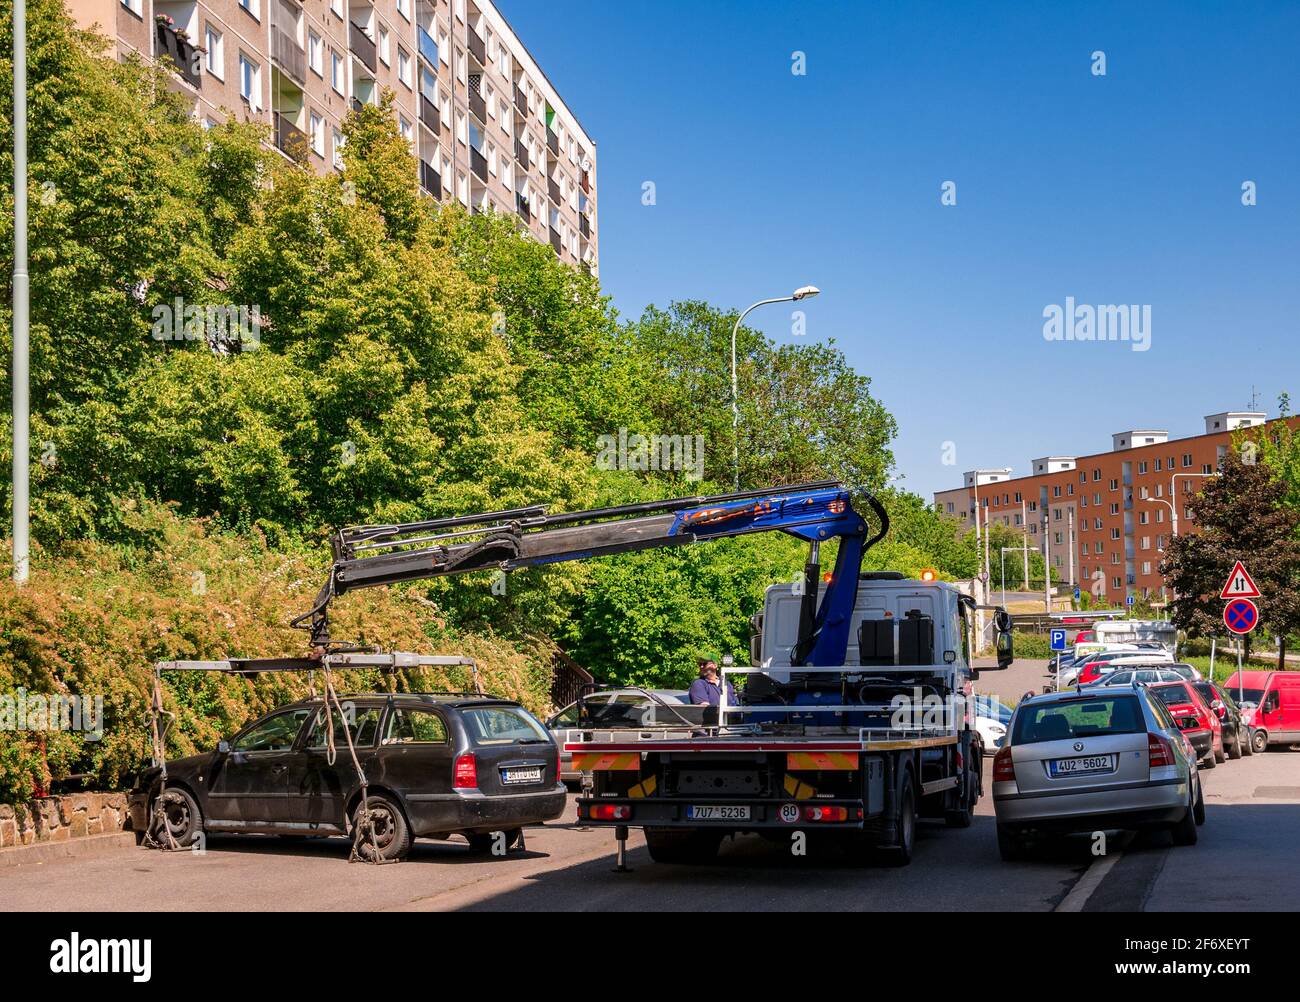 Usti nad Labem, Czech republic - 5.21.2018: Towing service car raises a car. Stock Photo